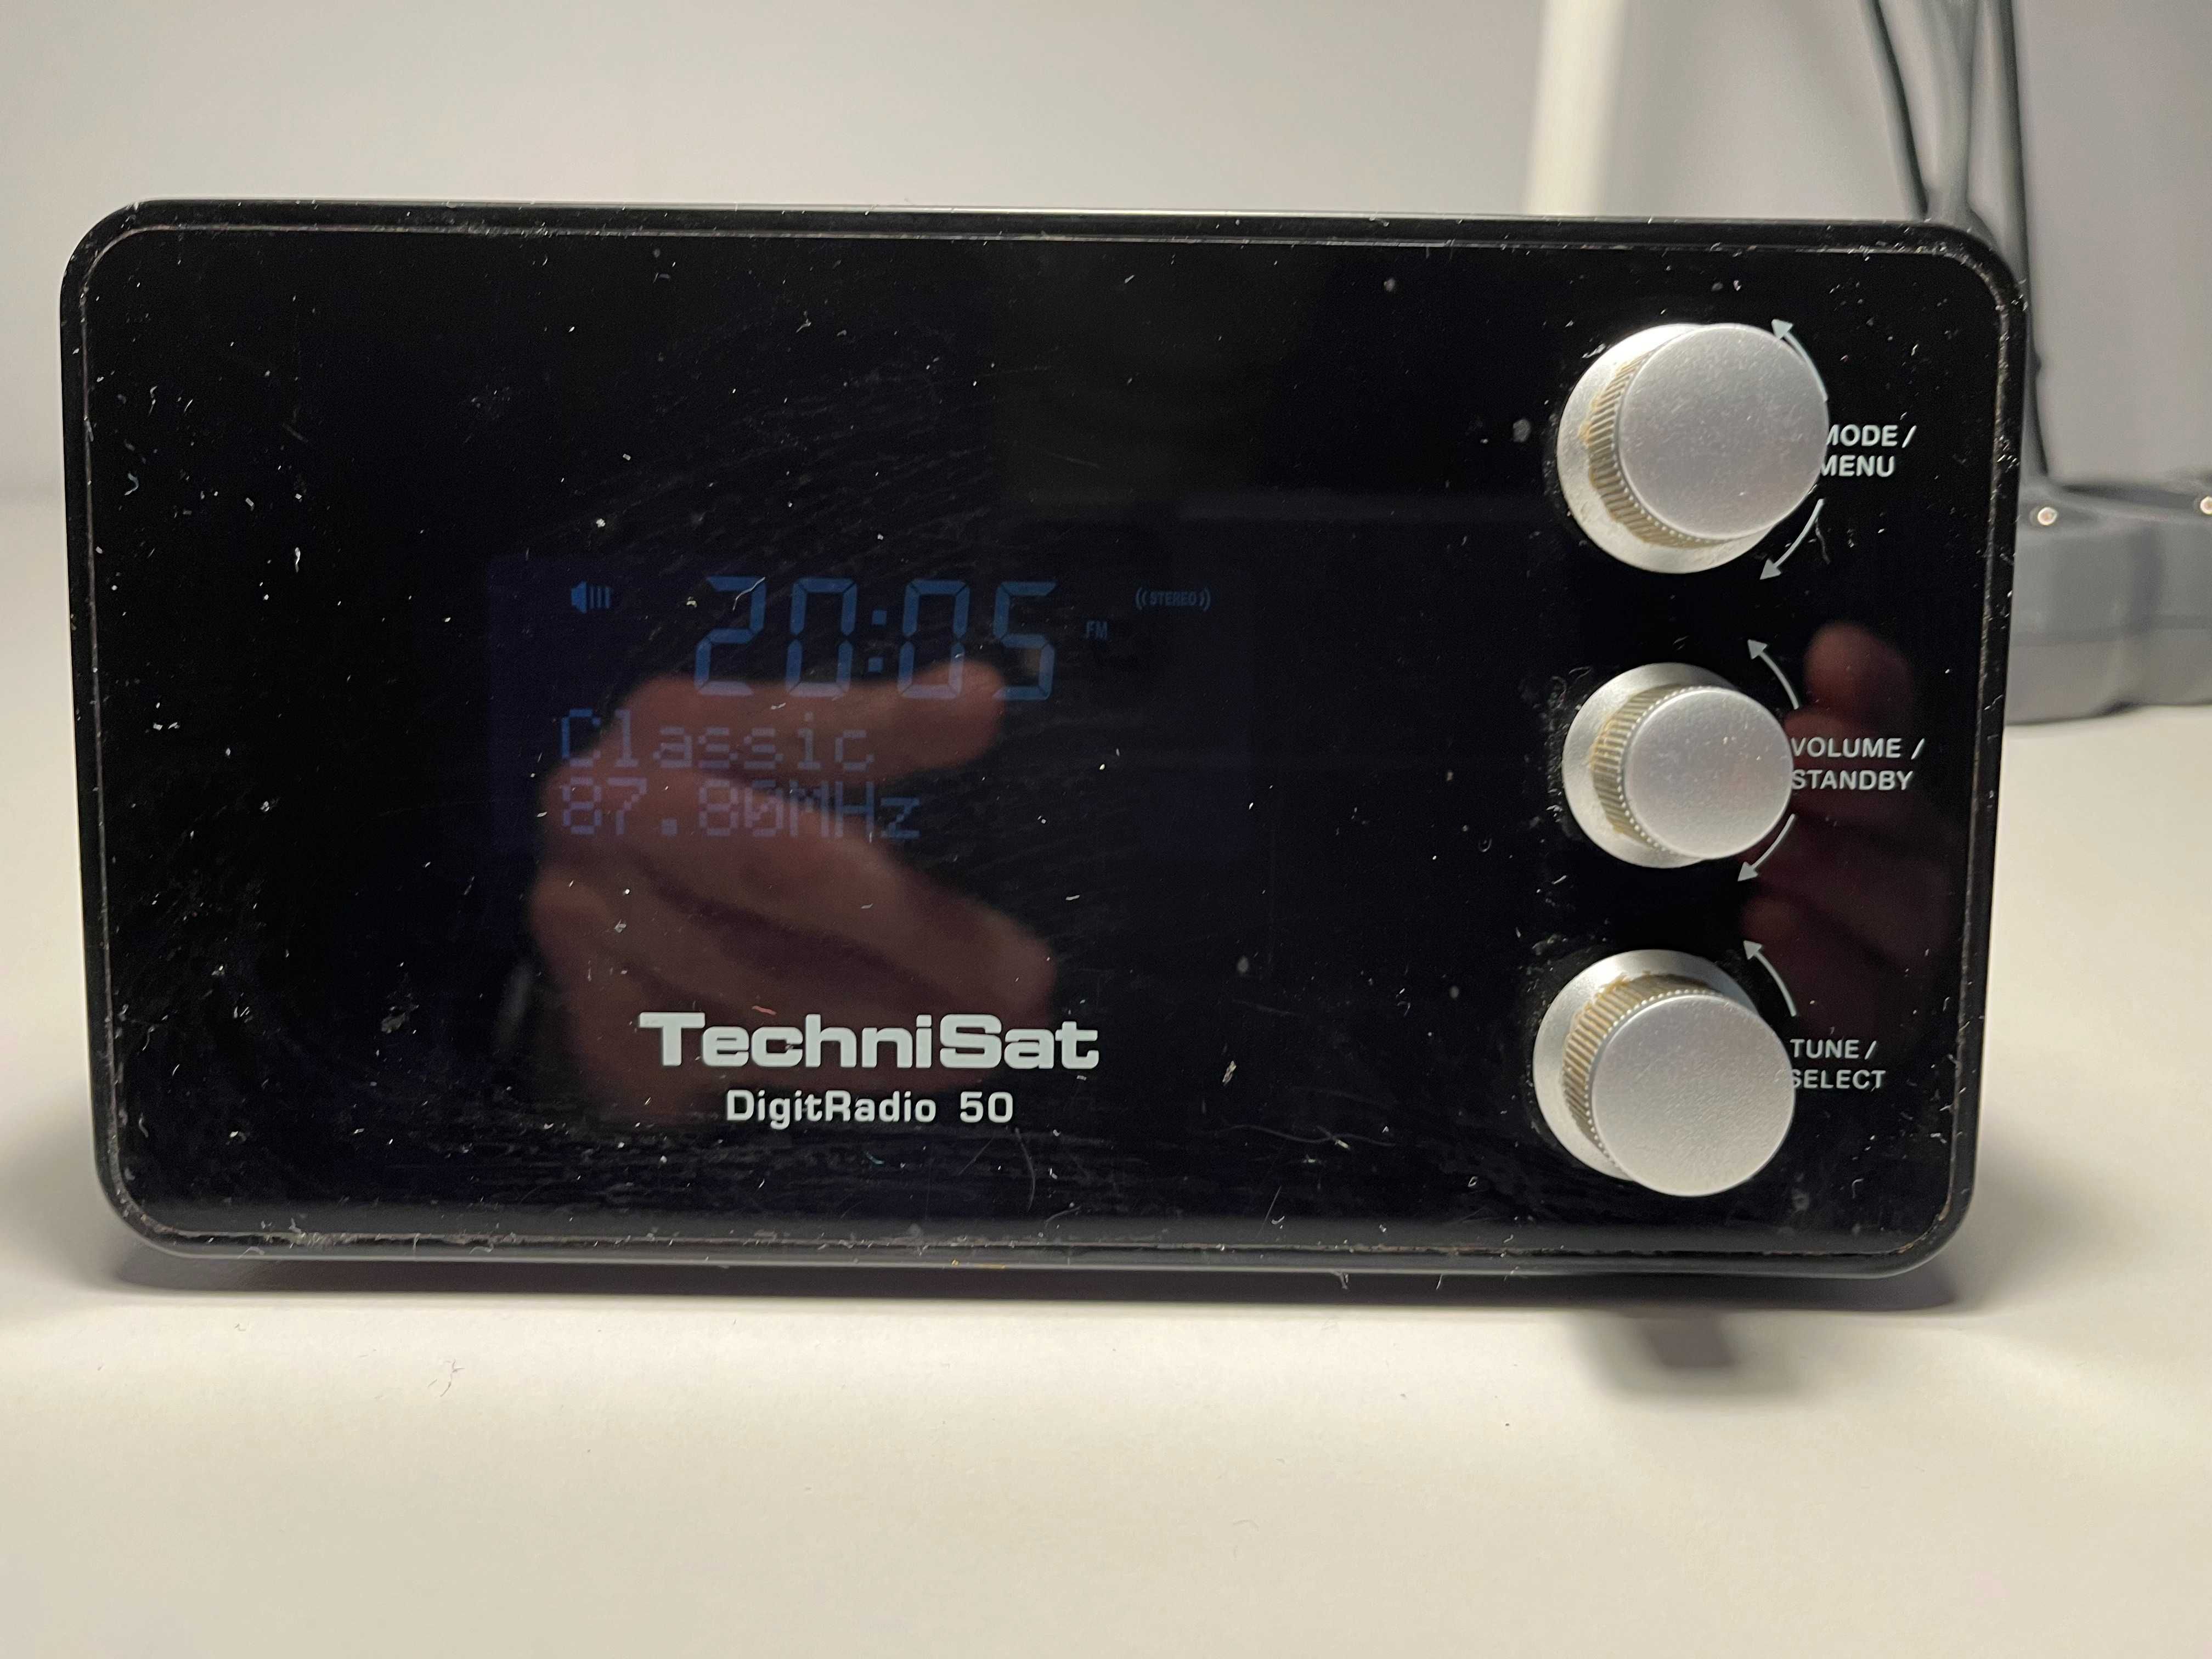 Cyfrowy Radioodbiornik TechniSat DigitRadio 50 FM Dab i Dab+ z zegarem